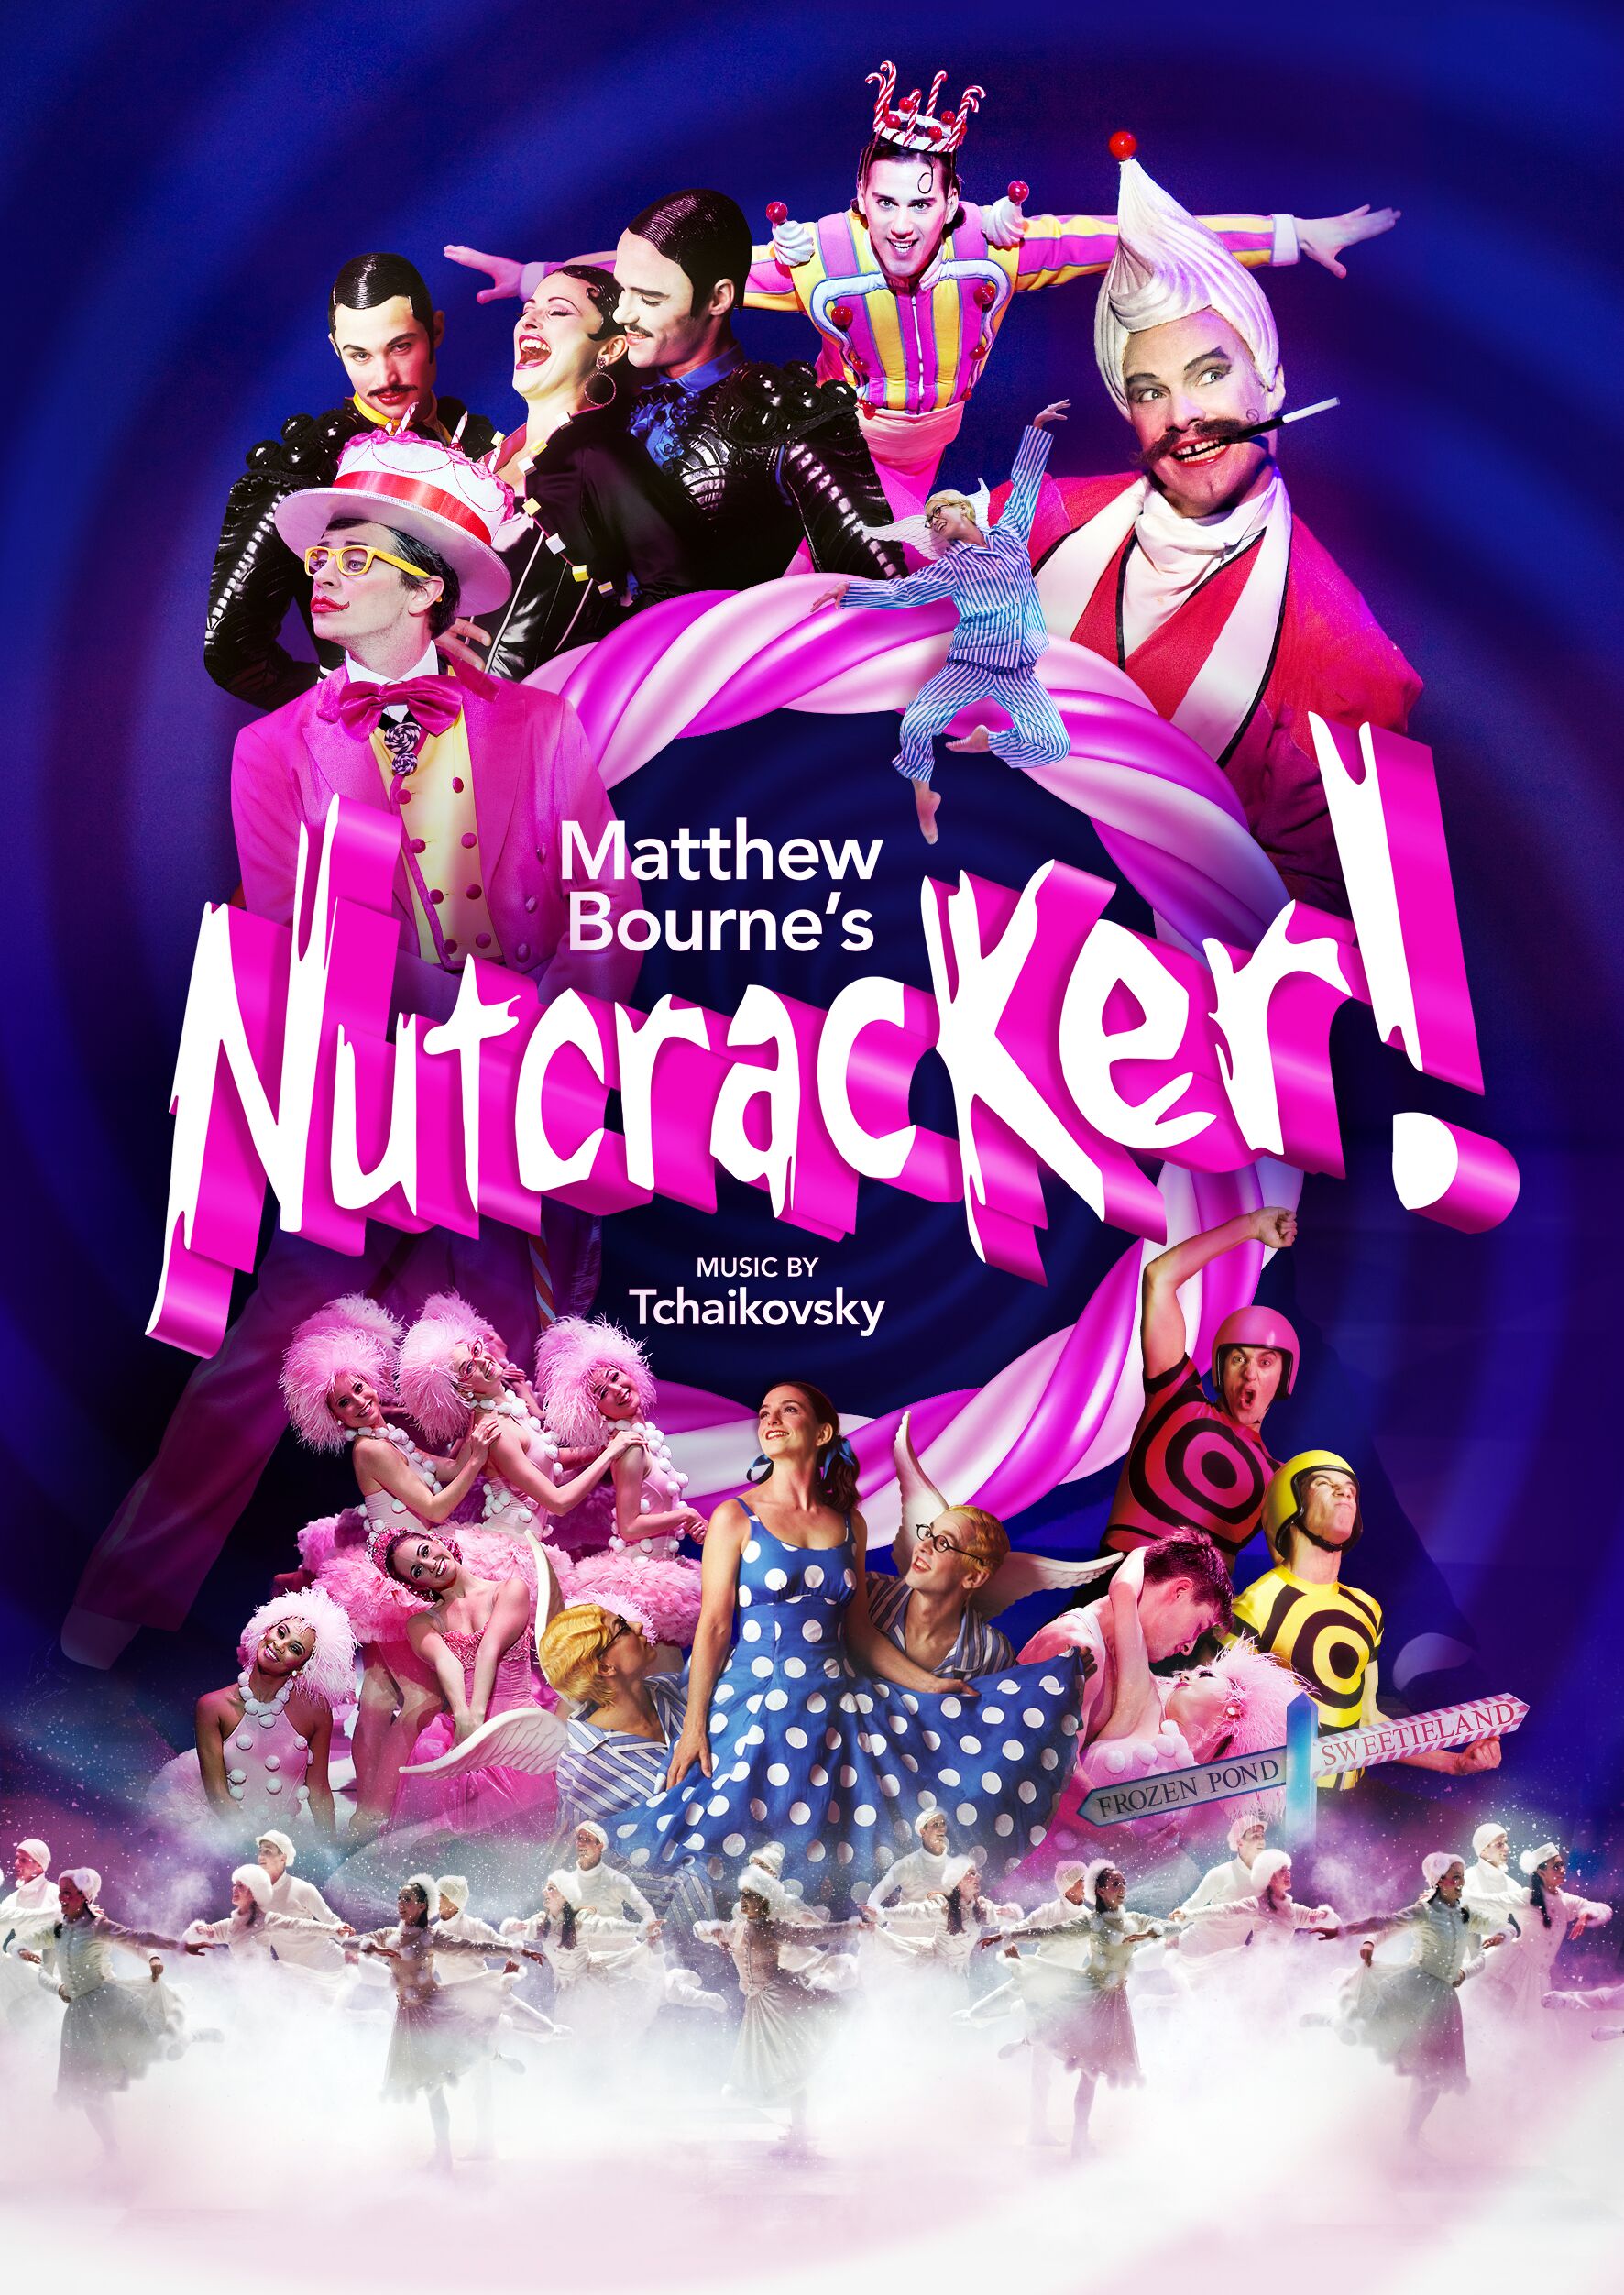 Matthew Bourne's Nutcracker! Comes to The Bristol Hippodrome